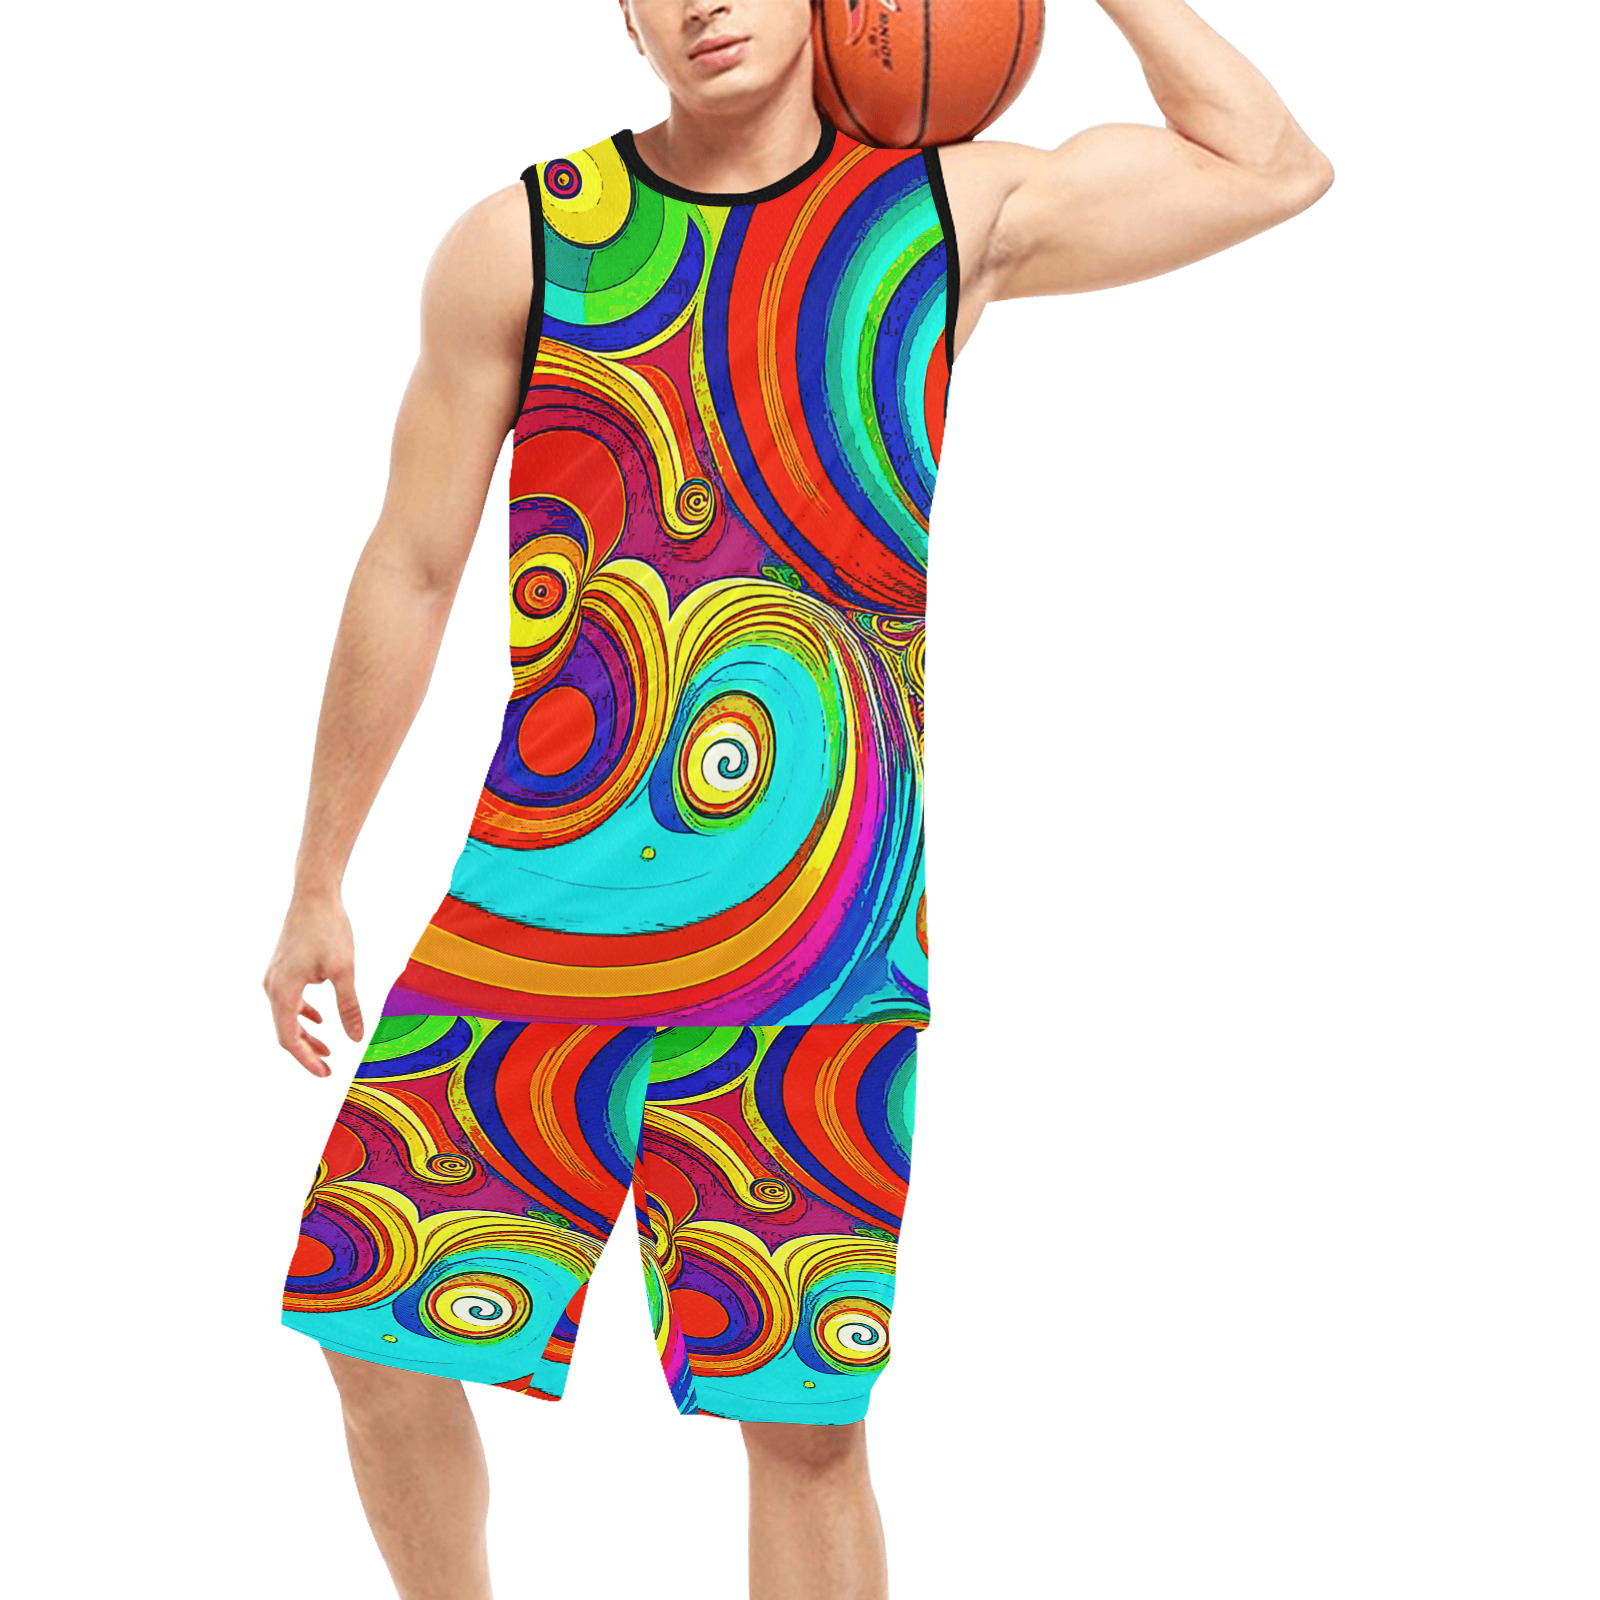 Colorful Groovy Rainbow Swirls Basketball Uniform with Pocket